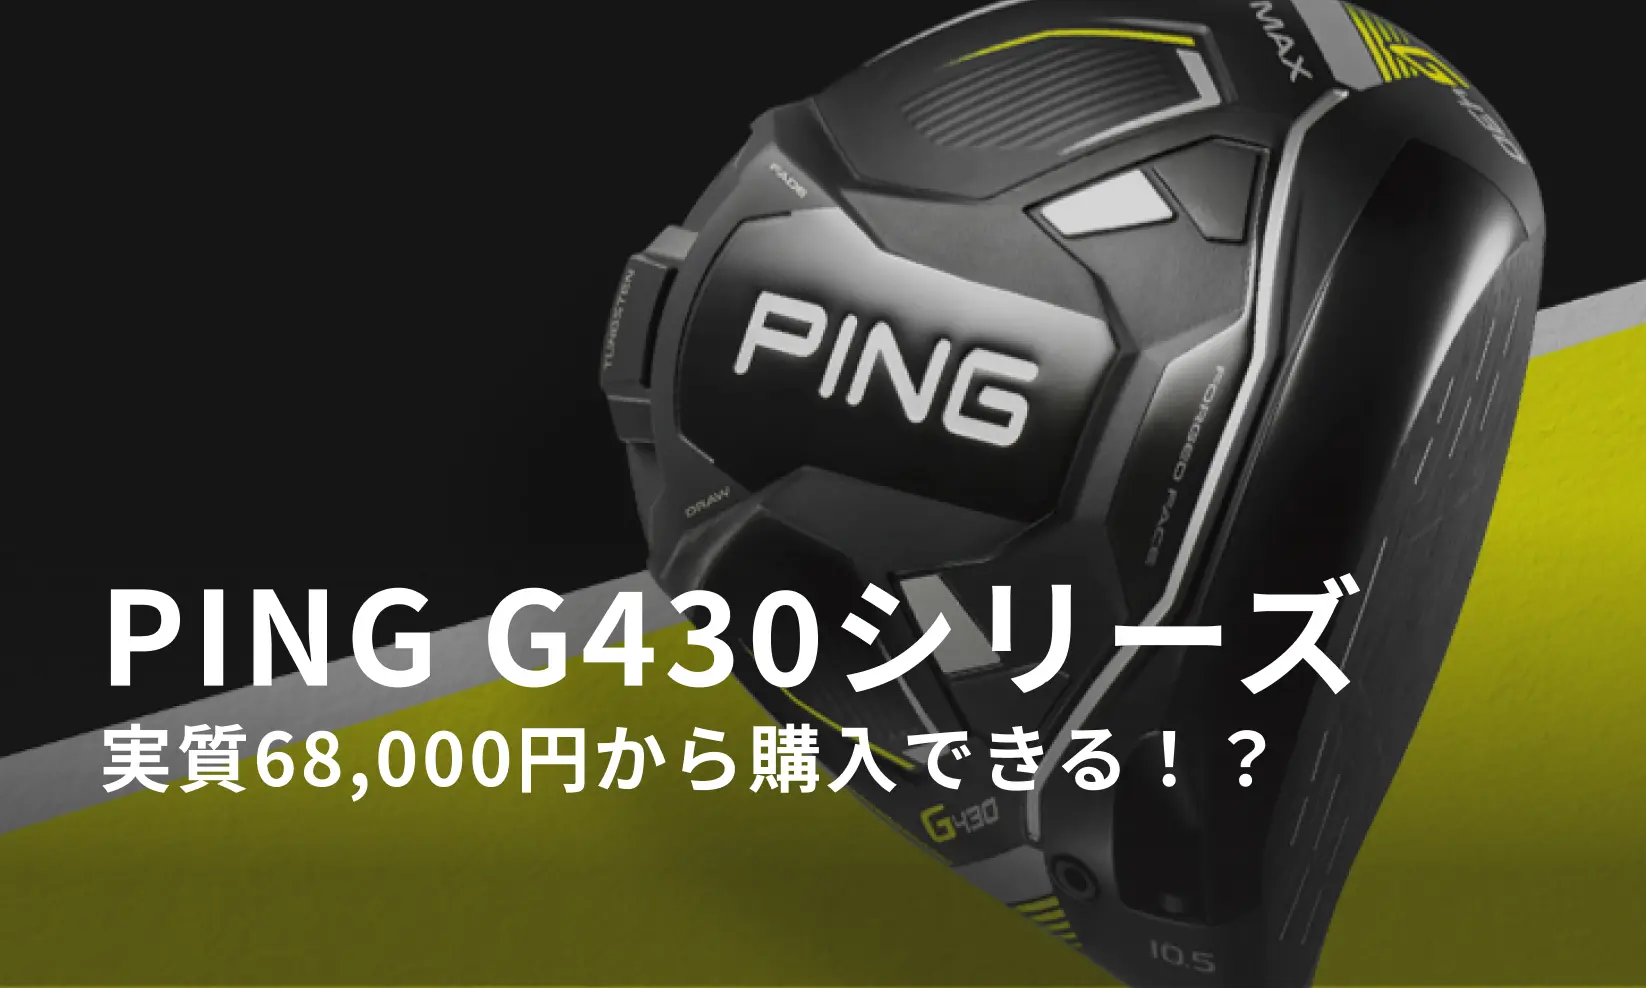 PING G430の発売日や価格、お得なキャンペーン情報を徹底調査